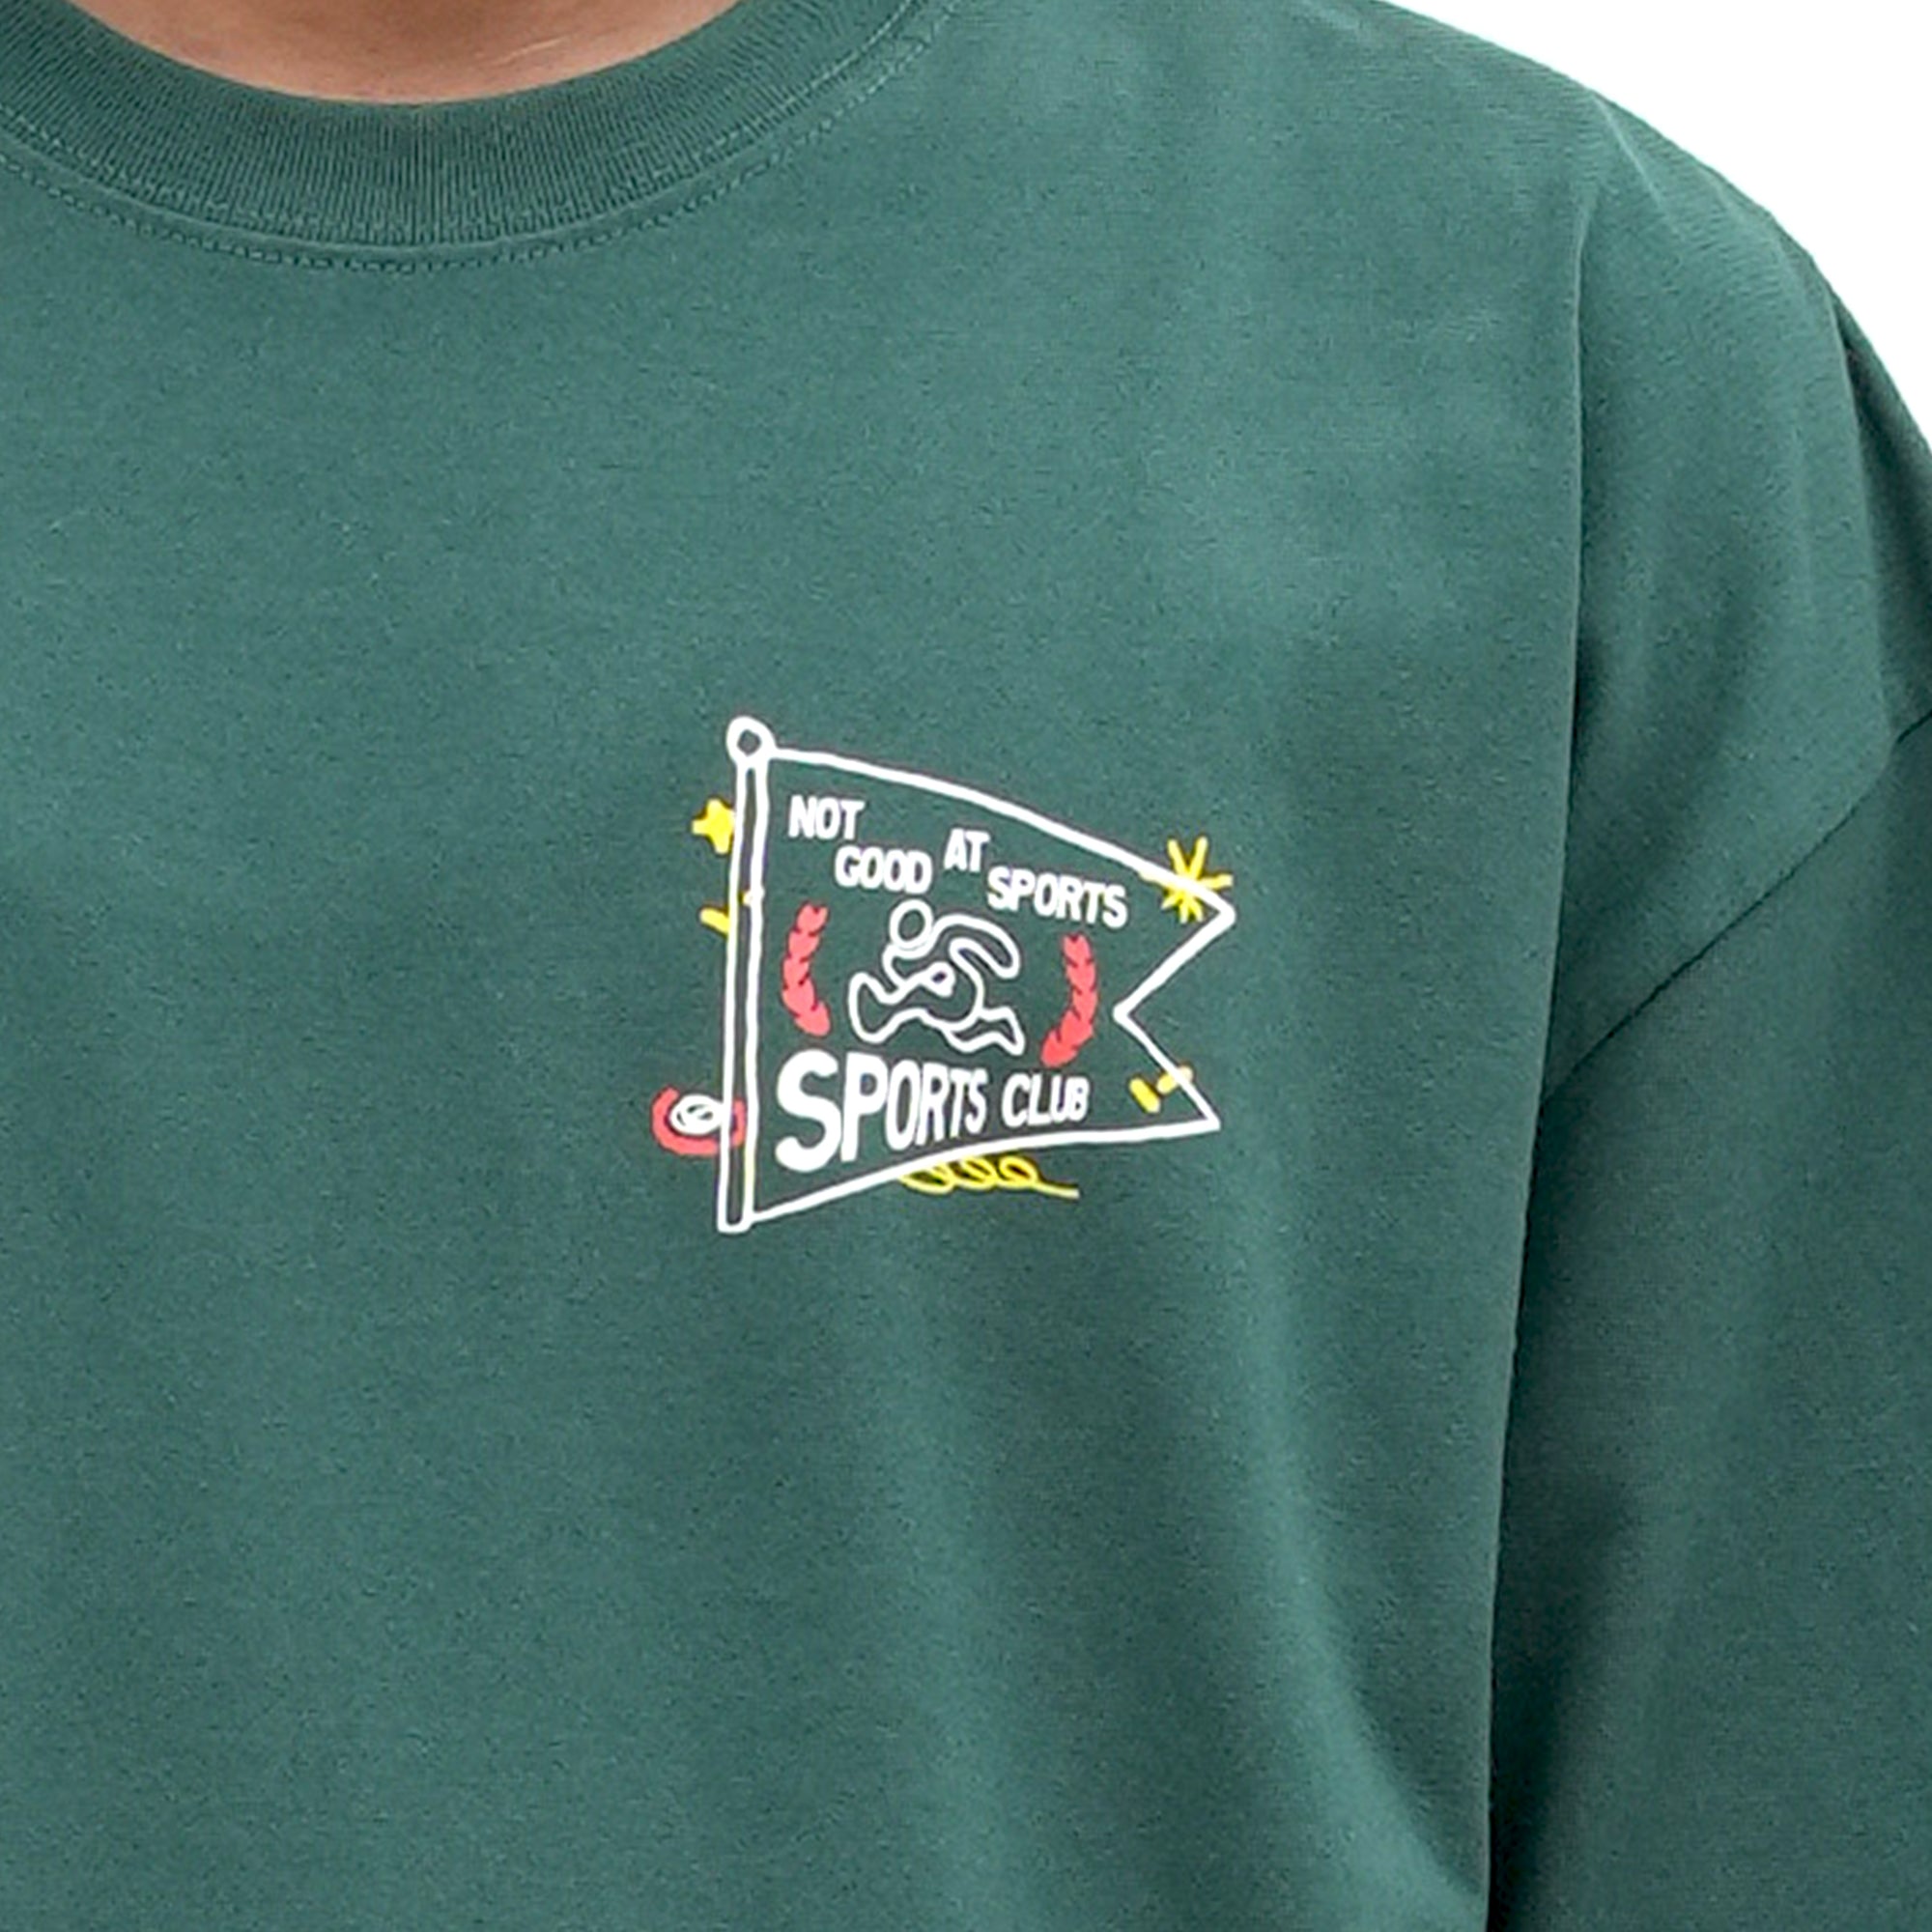 Roughneck OT161 Dark Green Not Good At Sports Oversize Tshirt